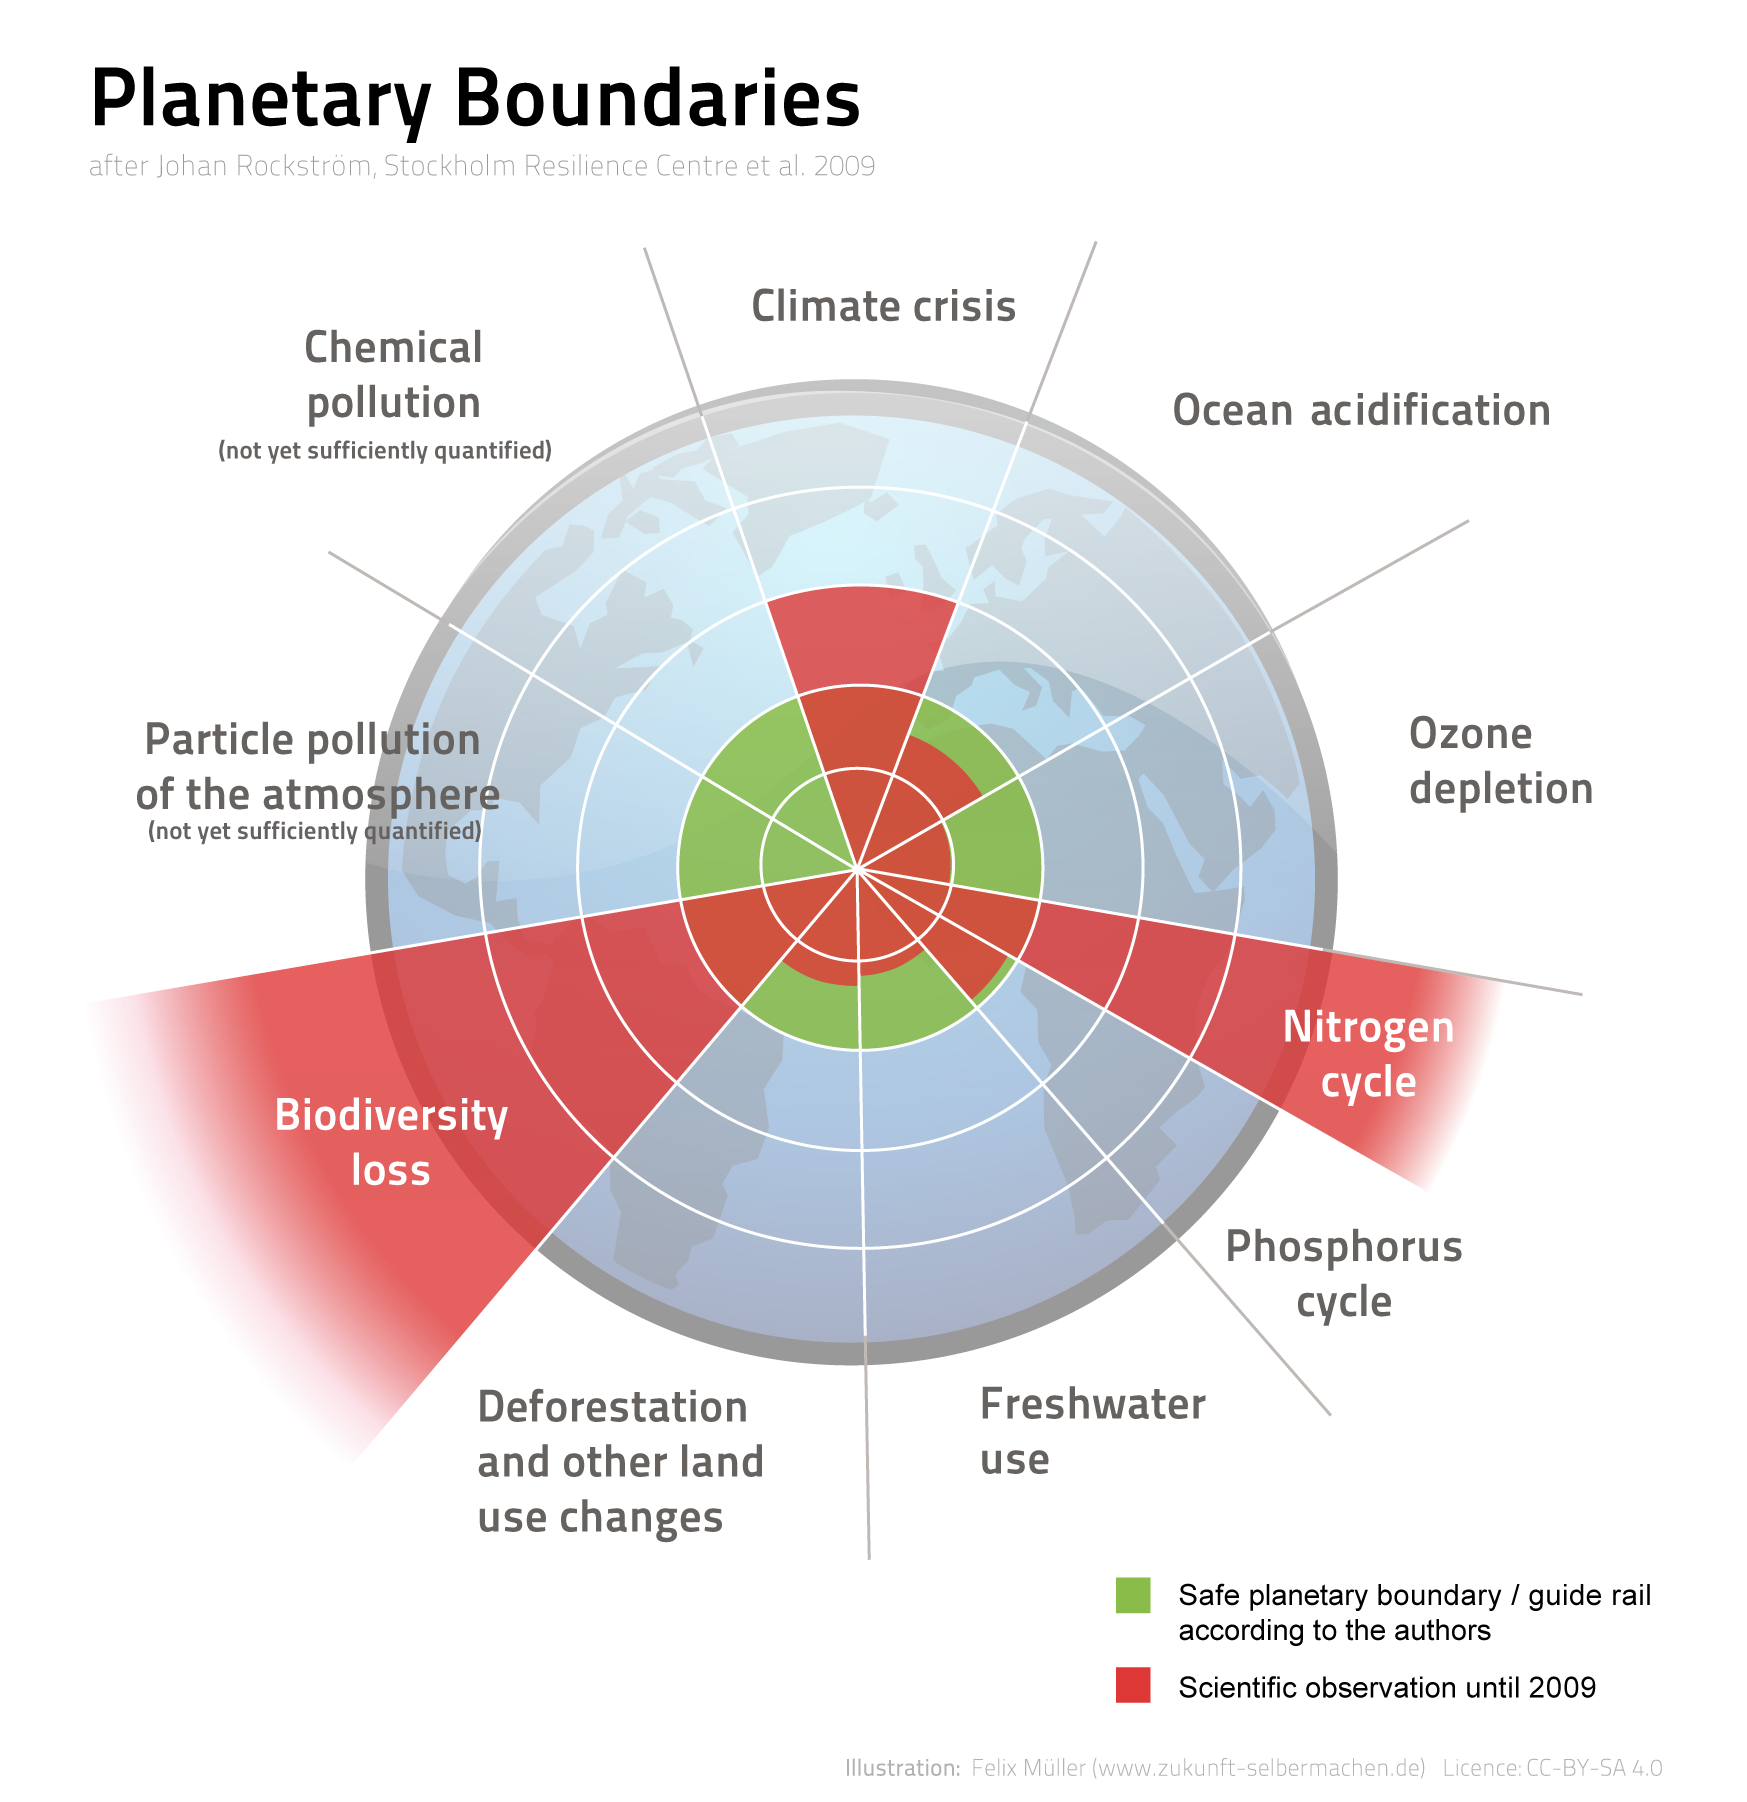 Scheme for planetary boundaries